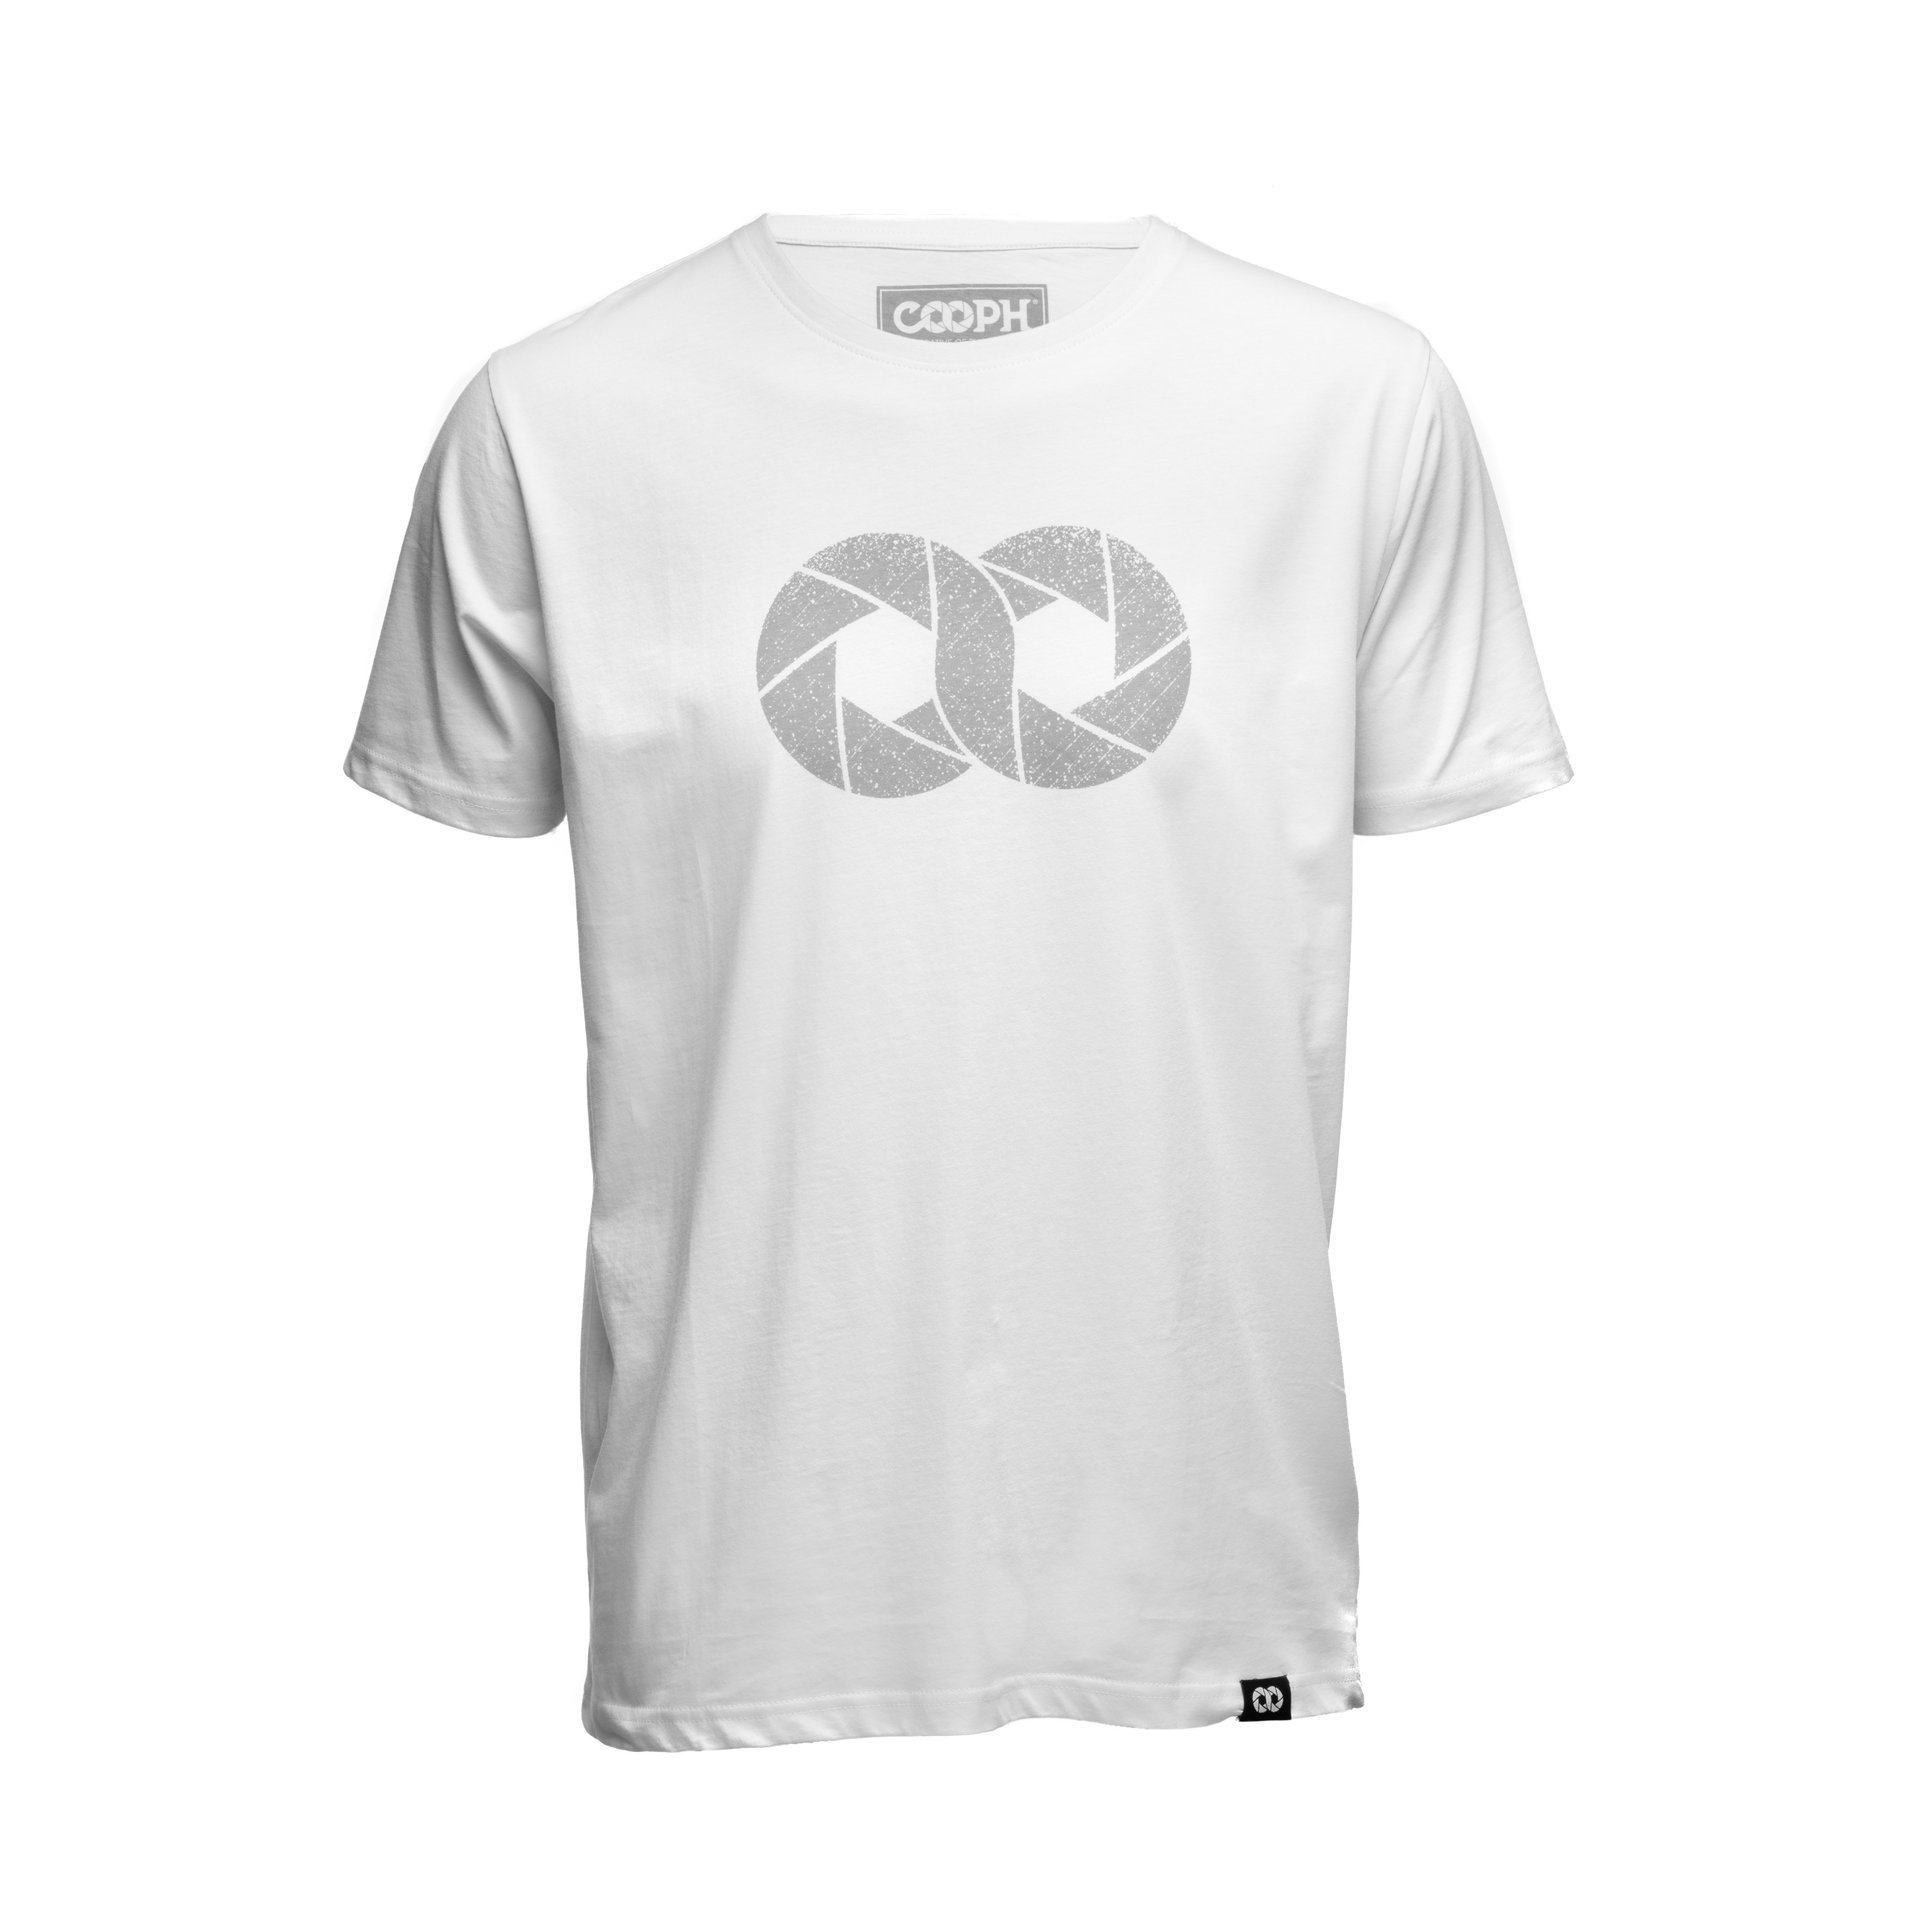 TThumbnail image for COOPH Icon T-shirt - Nimbus Cloud